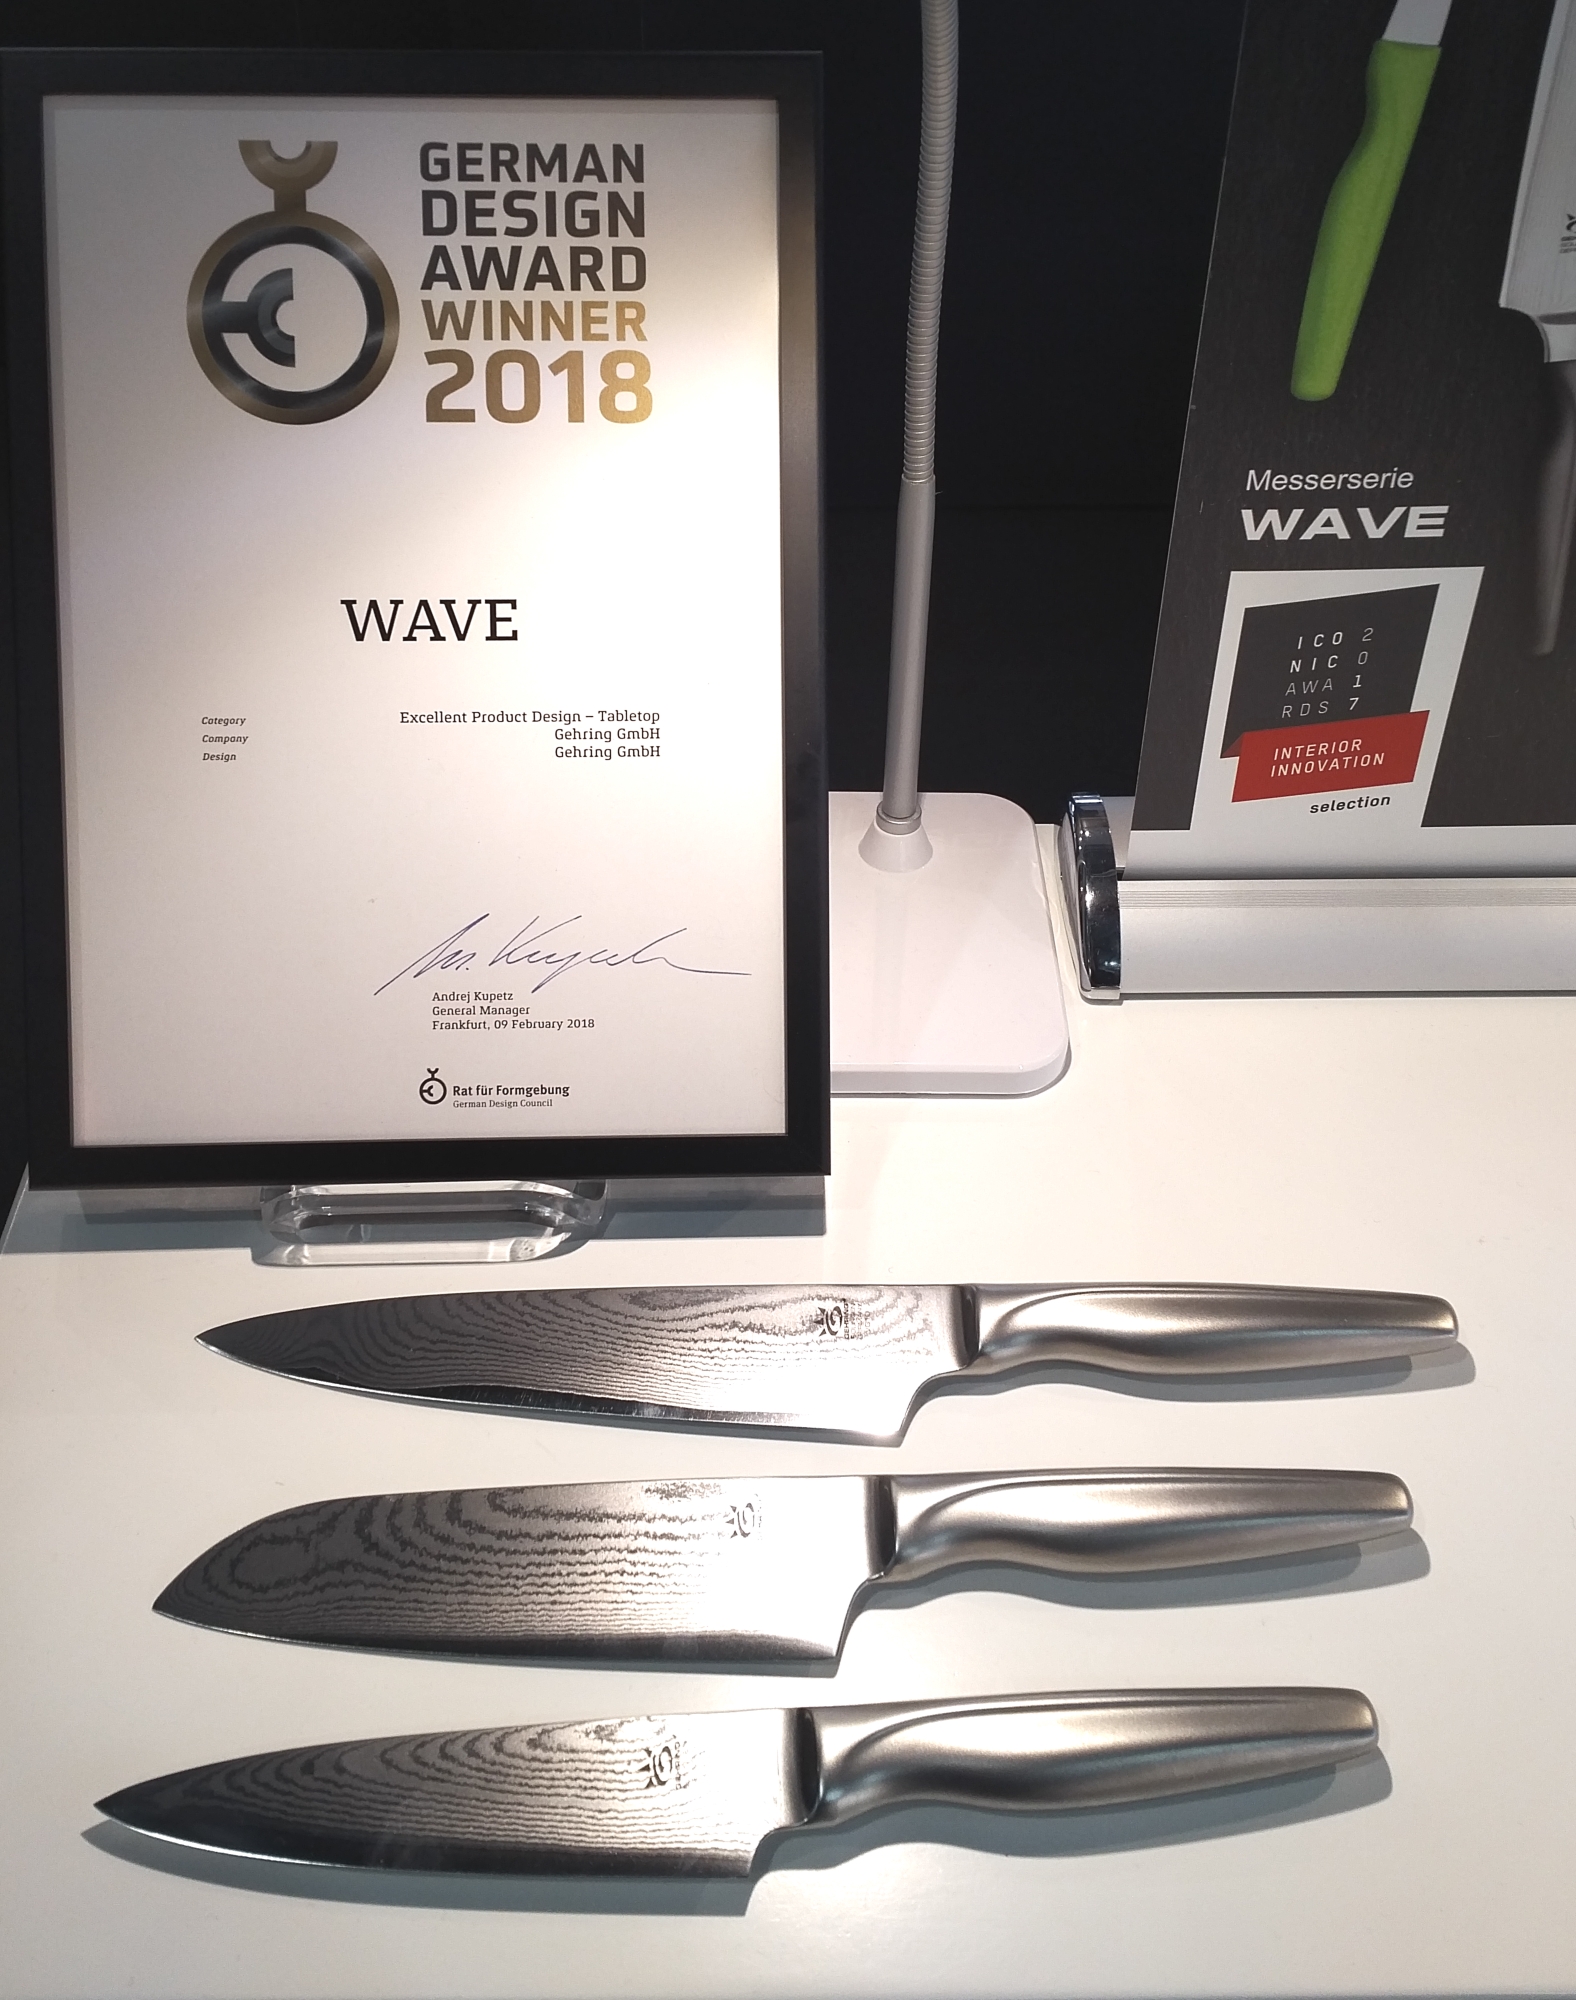 Manufakturen-Blog: Gehrings Messerserie "Wave" gewann den German Design Award 2018 (Foto: Wigmar Bressel)